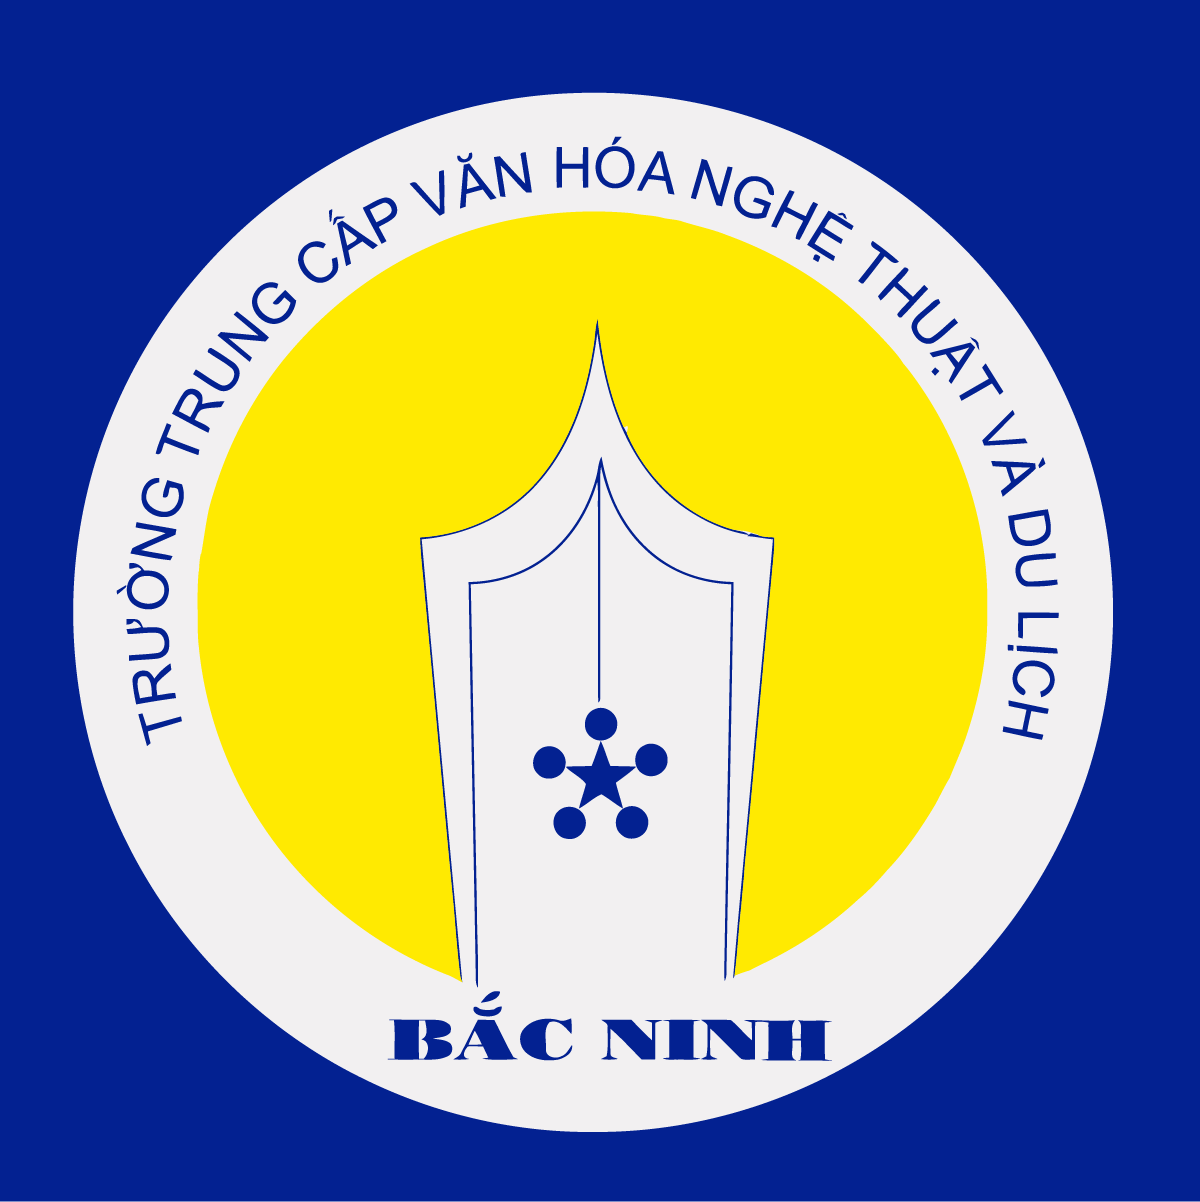 Logo Truong Trung cap Van hoa Nghe thuat va Du lich Bac Ninh